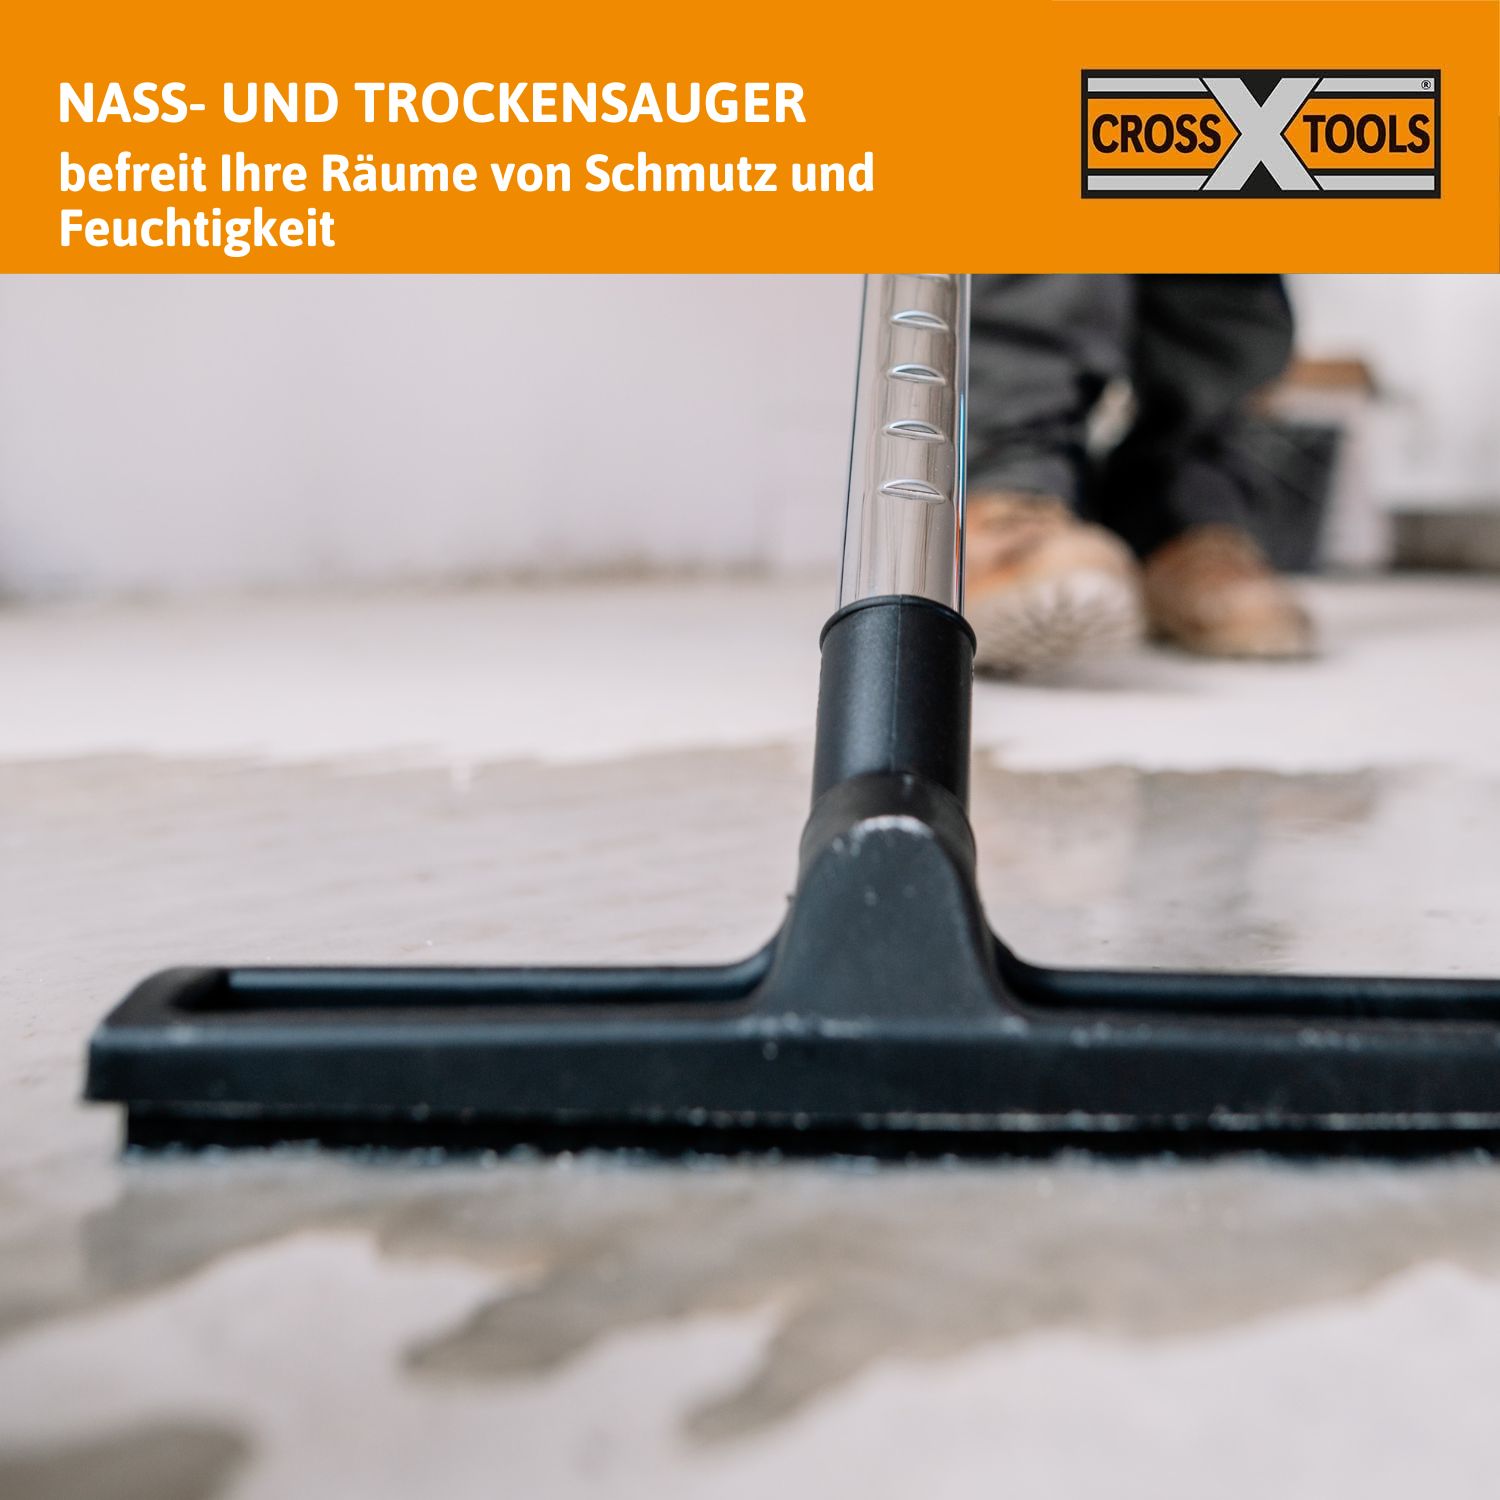 Nass-Trocken-Aschesauger NTAS 1200 - 4 in 1